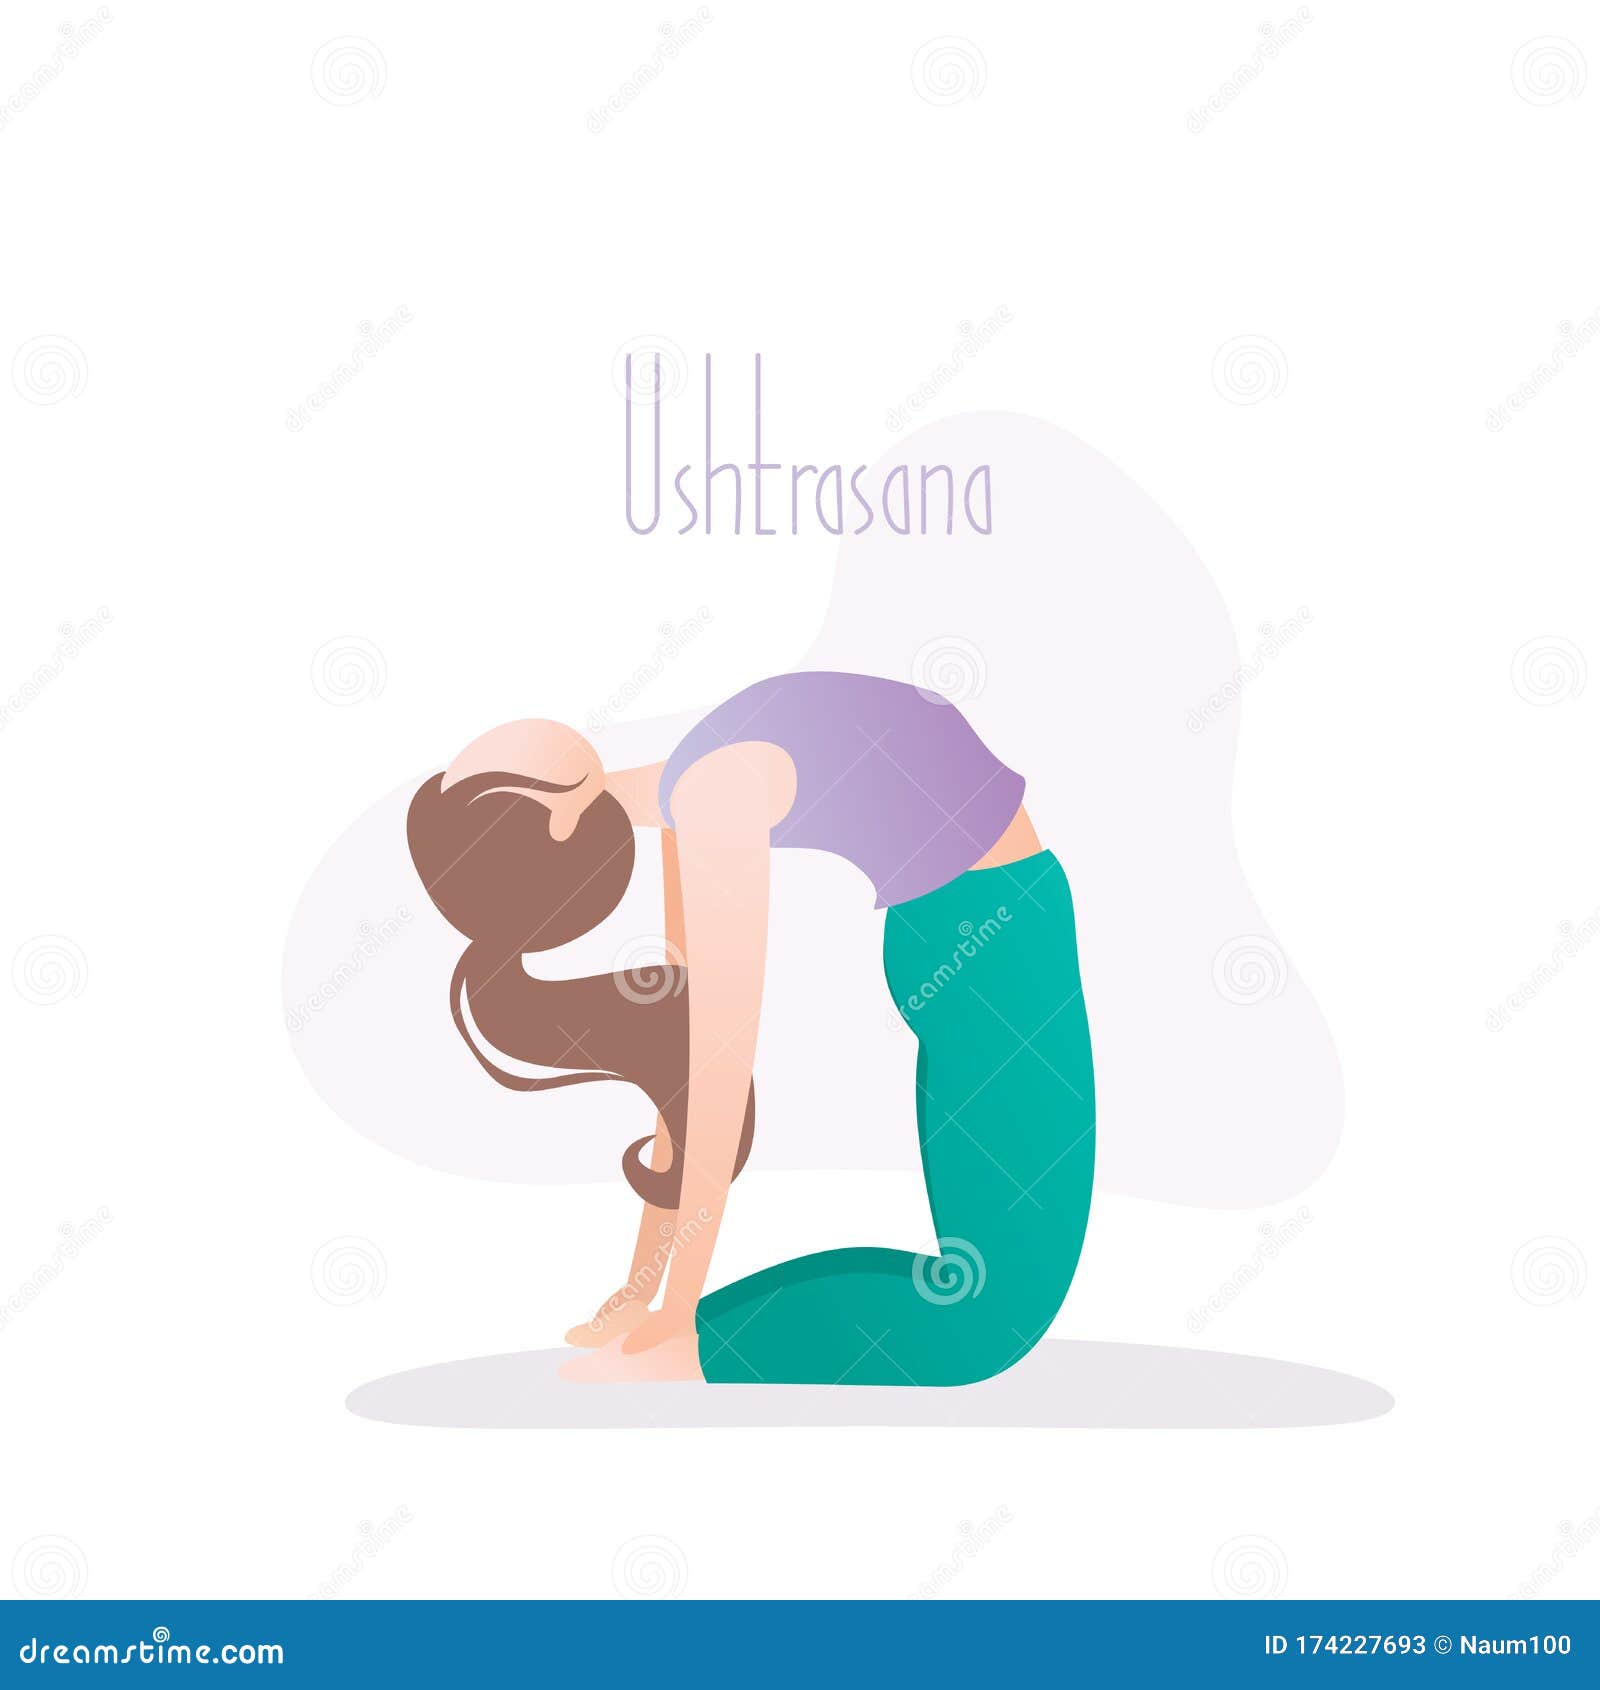 Ushtrasana | Yoga Asanas Blogs | Nepal | Yoga Teacher Training in Nepal |